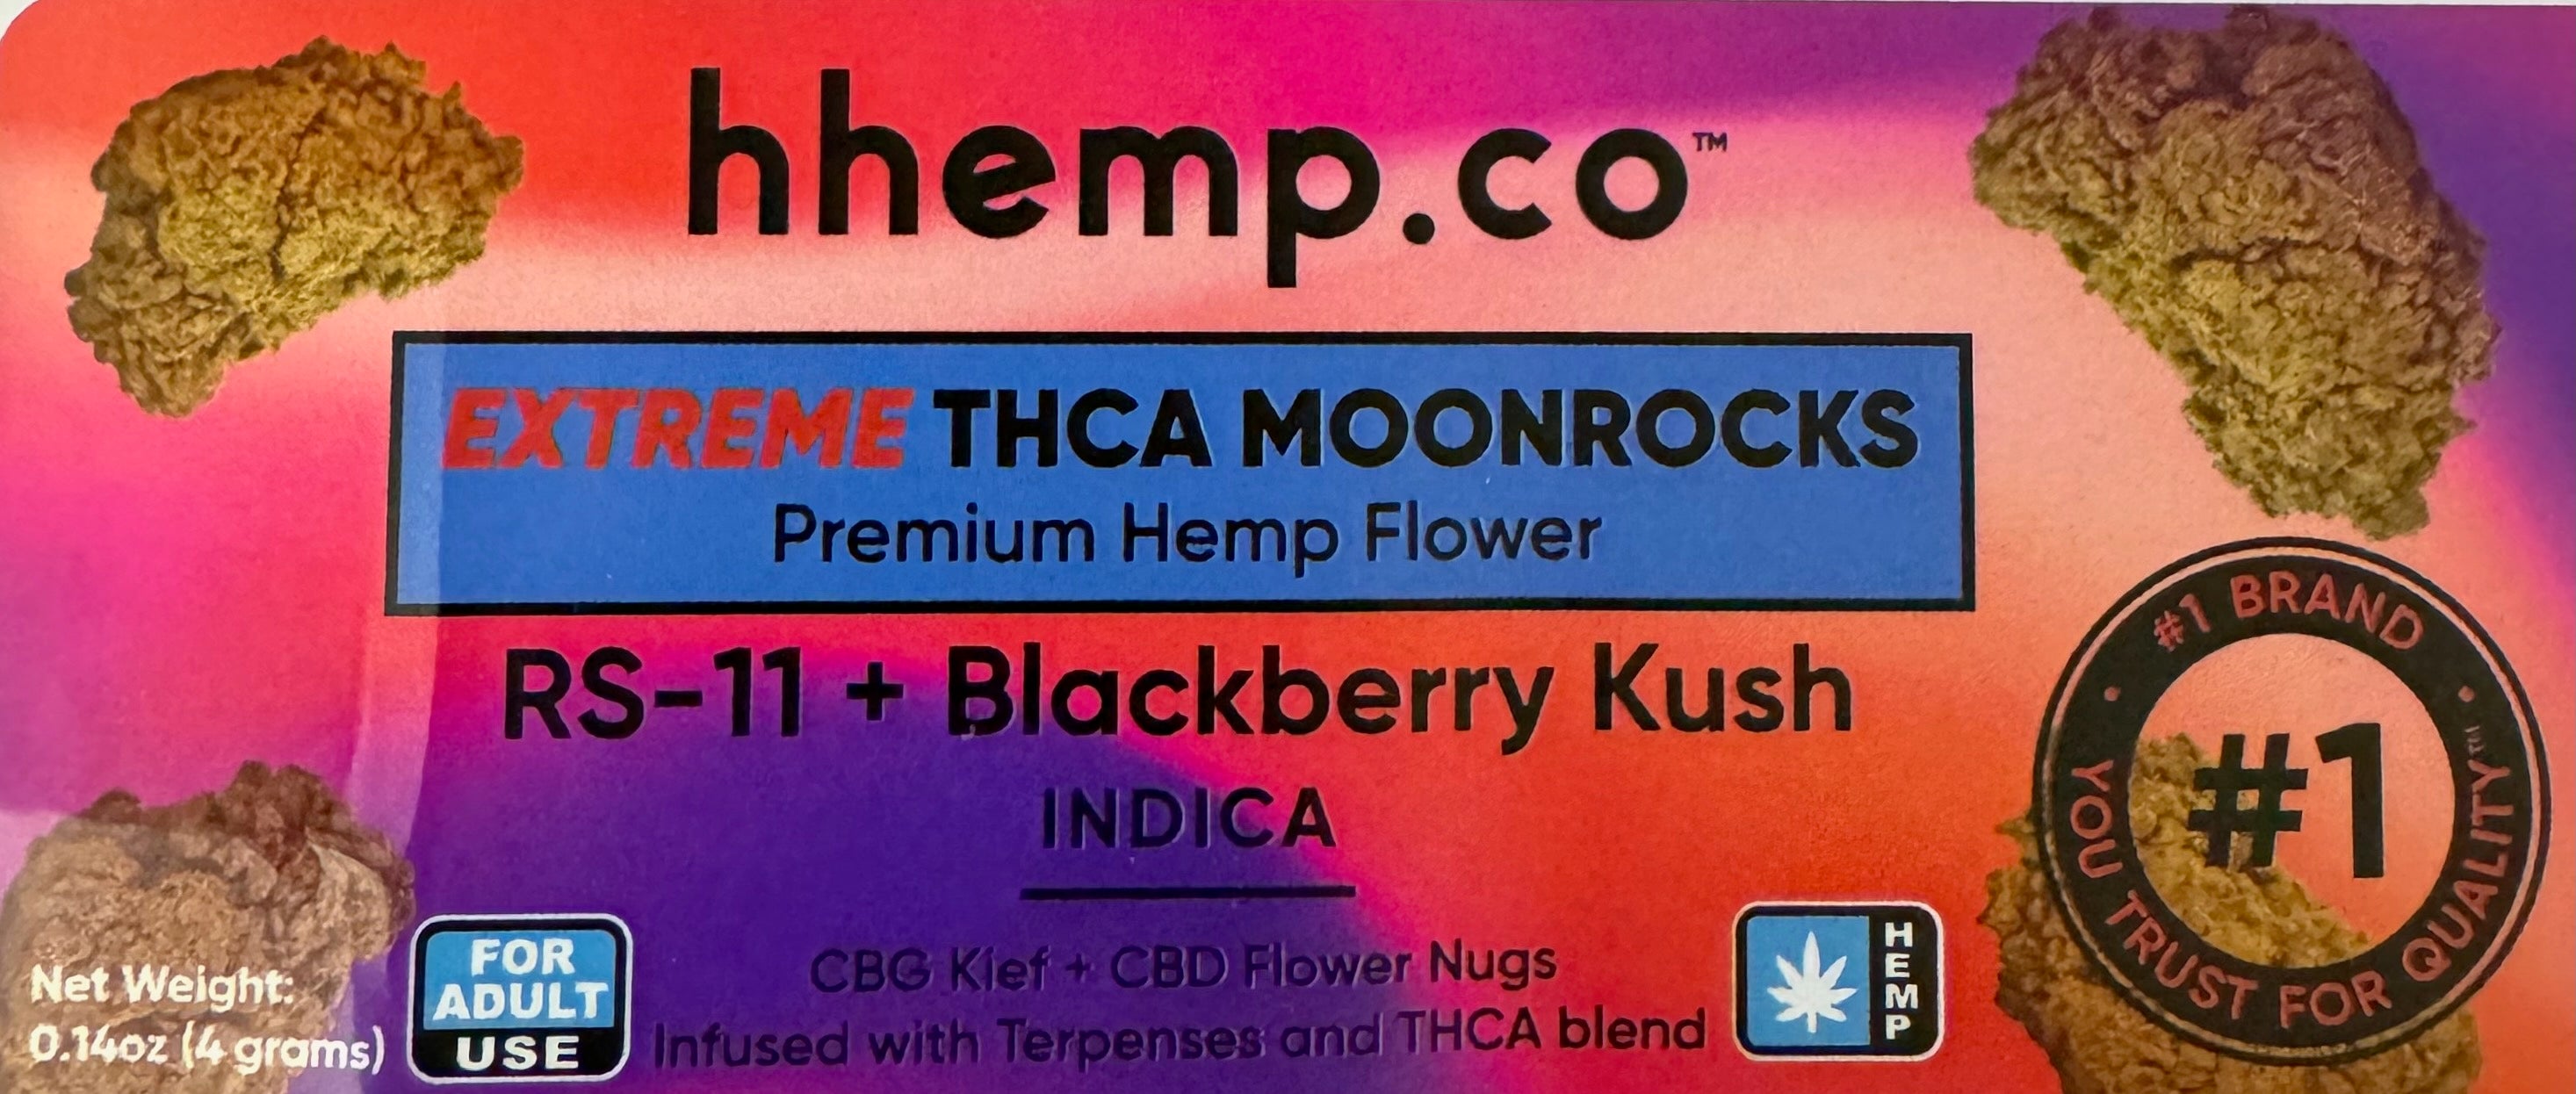 Extreme THCA Moonrocks Hemp Flower 4g - Unit